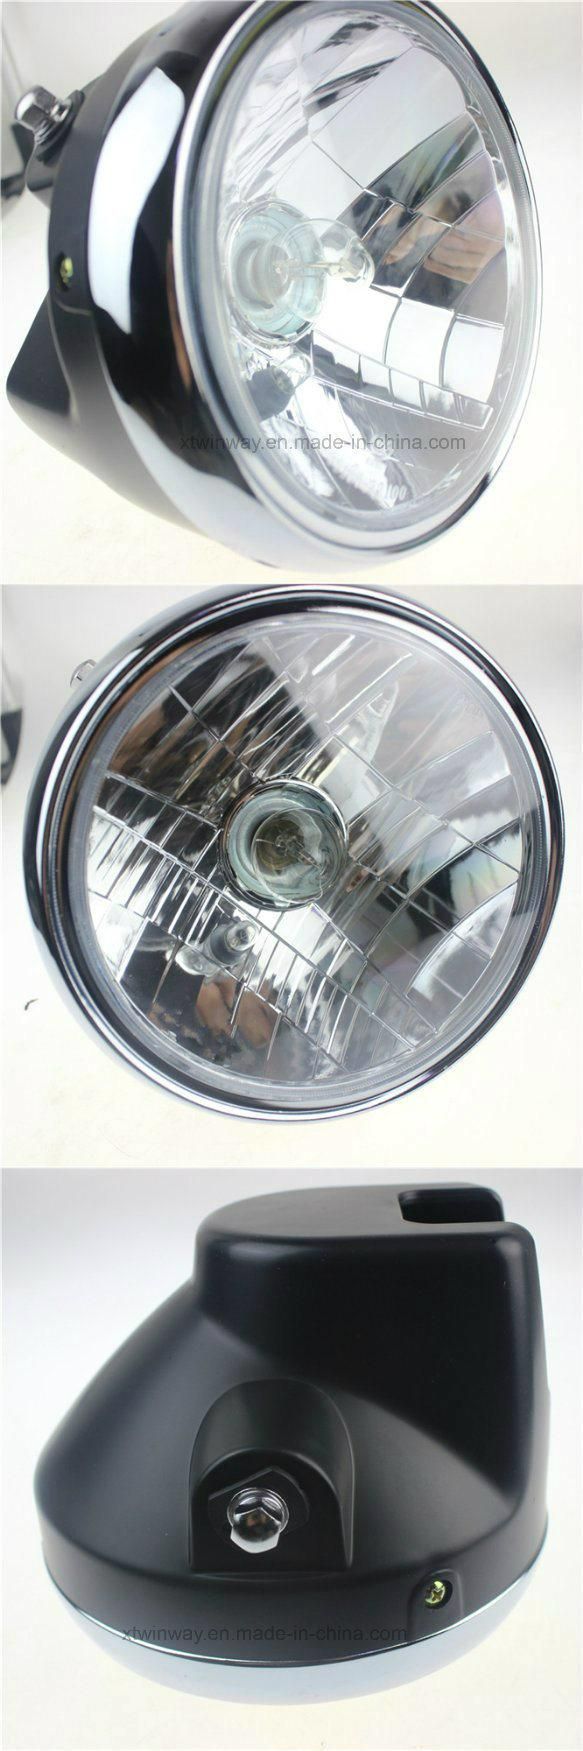 En125 Front Lamp Motorcycle Headlight Motorcycle Parts